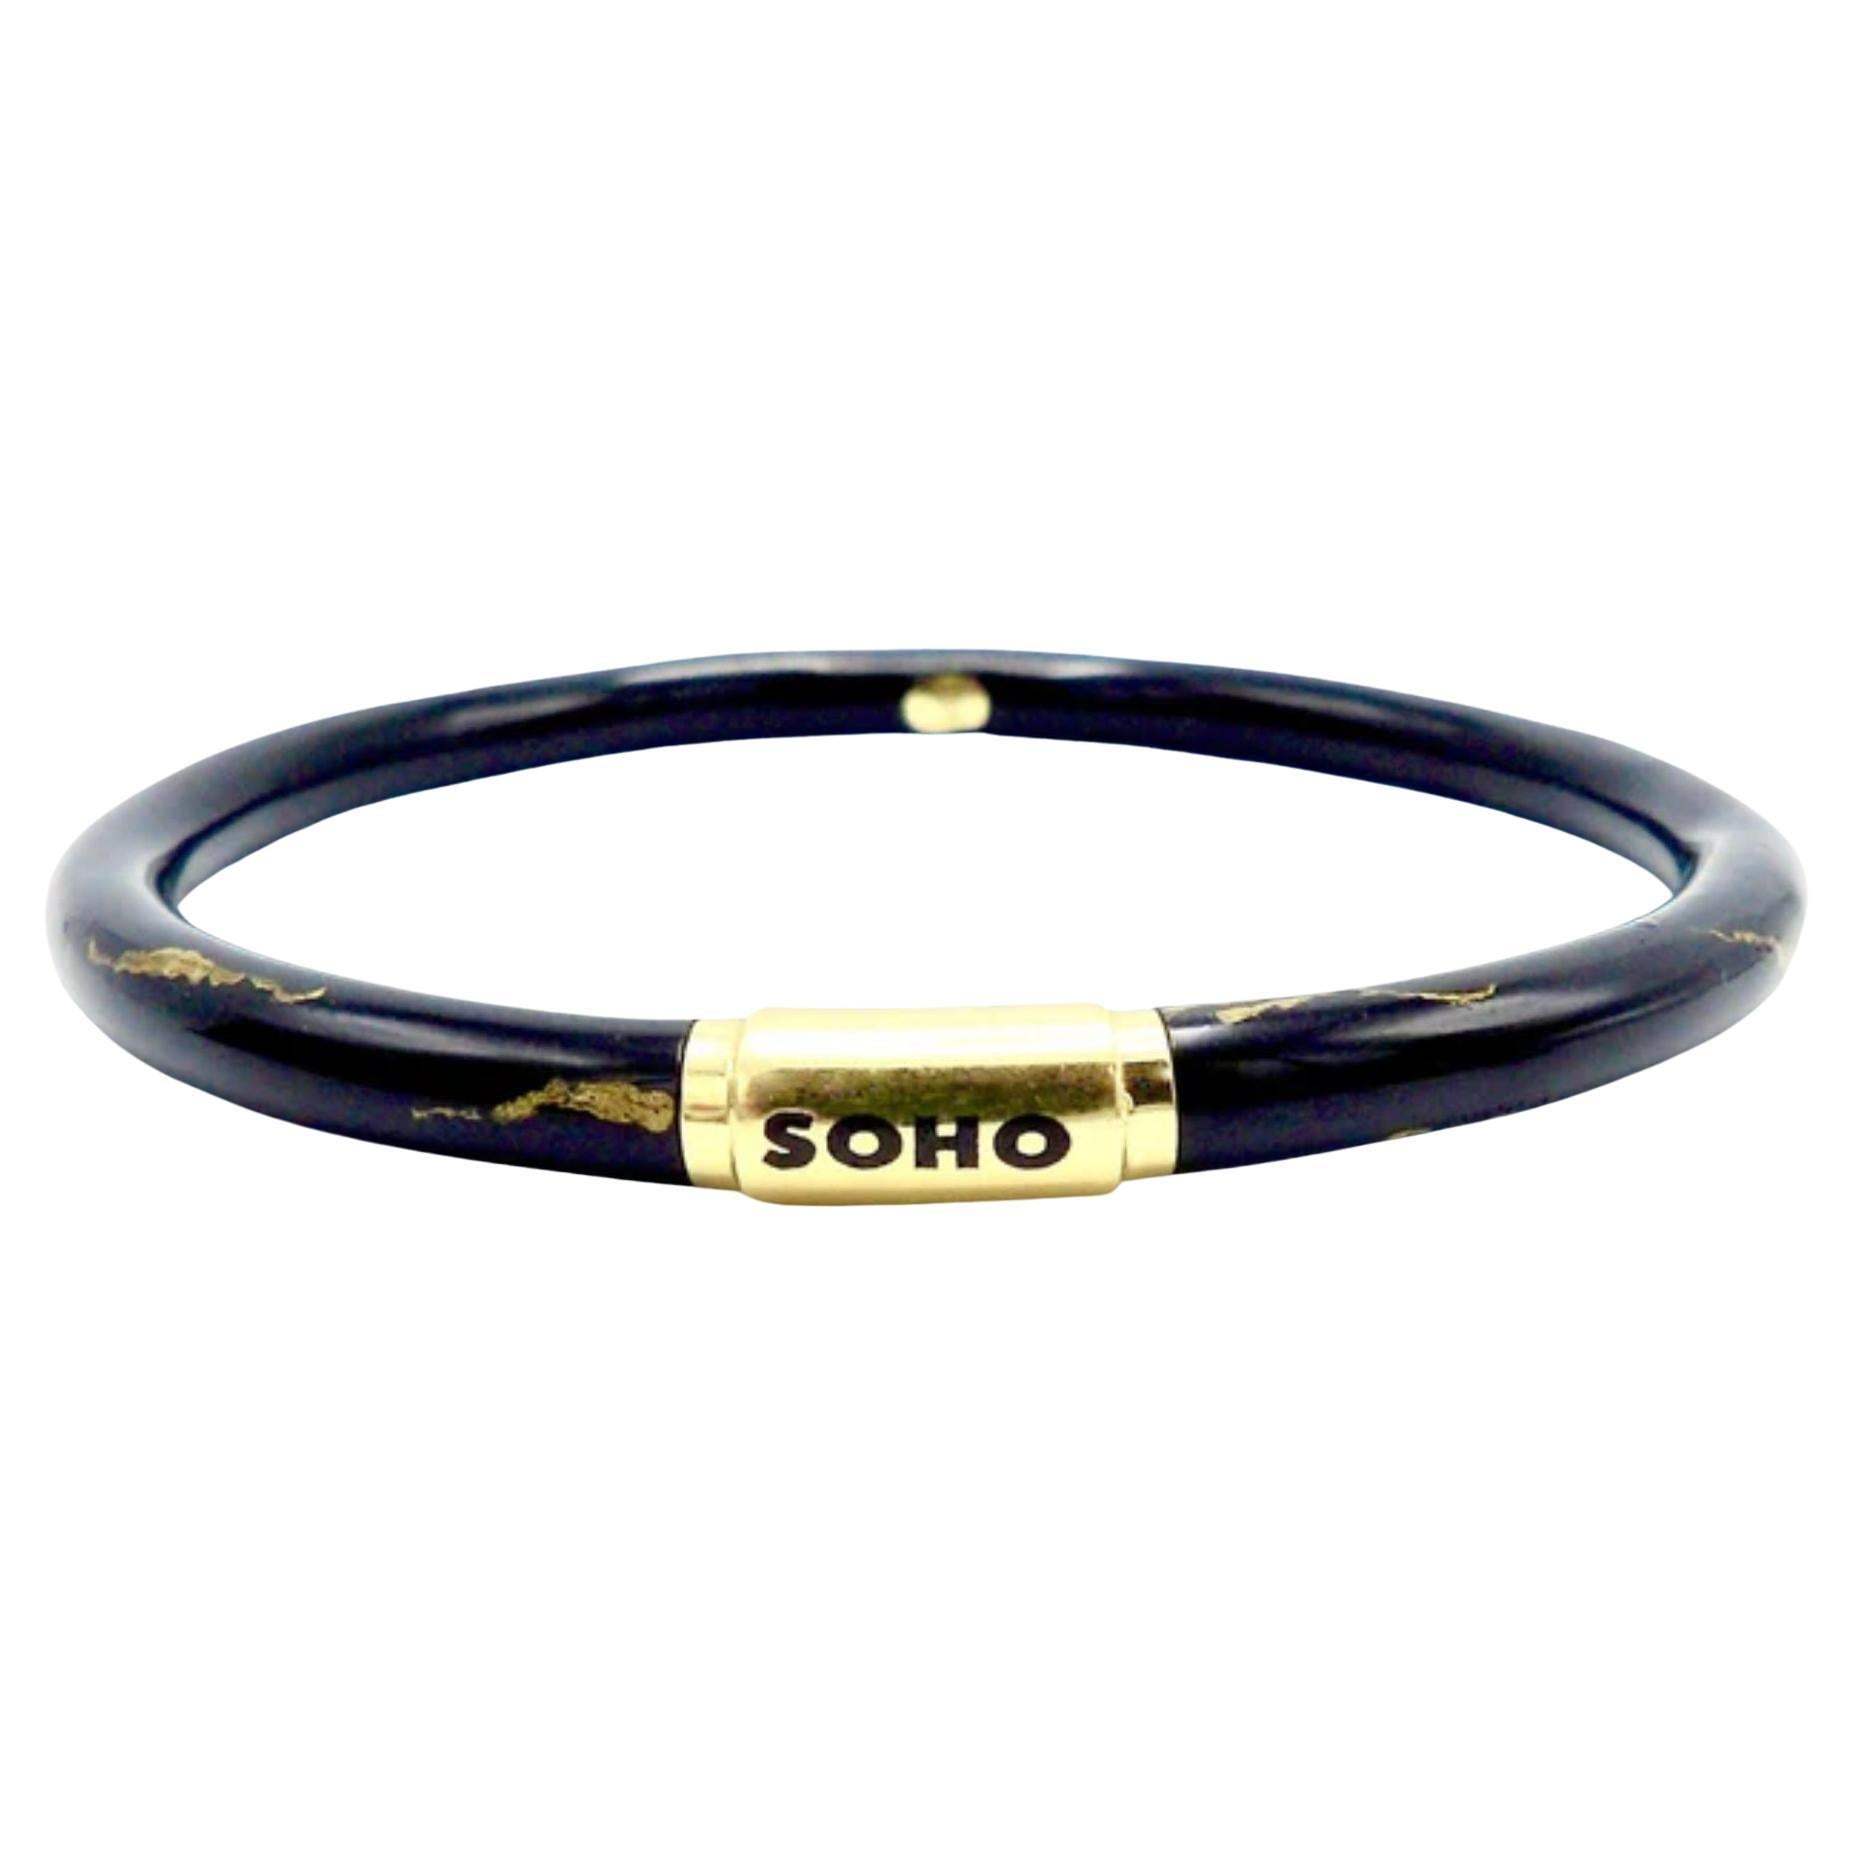 Soho 18K Gold Black Enamel Calligraphic Stripe Bangle Bracelet, circa 2010 For Sale